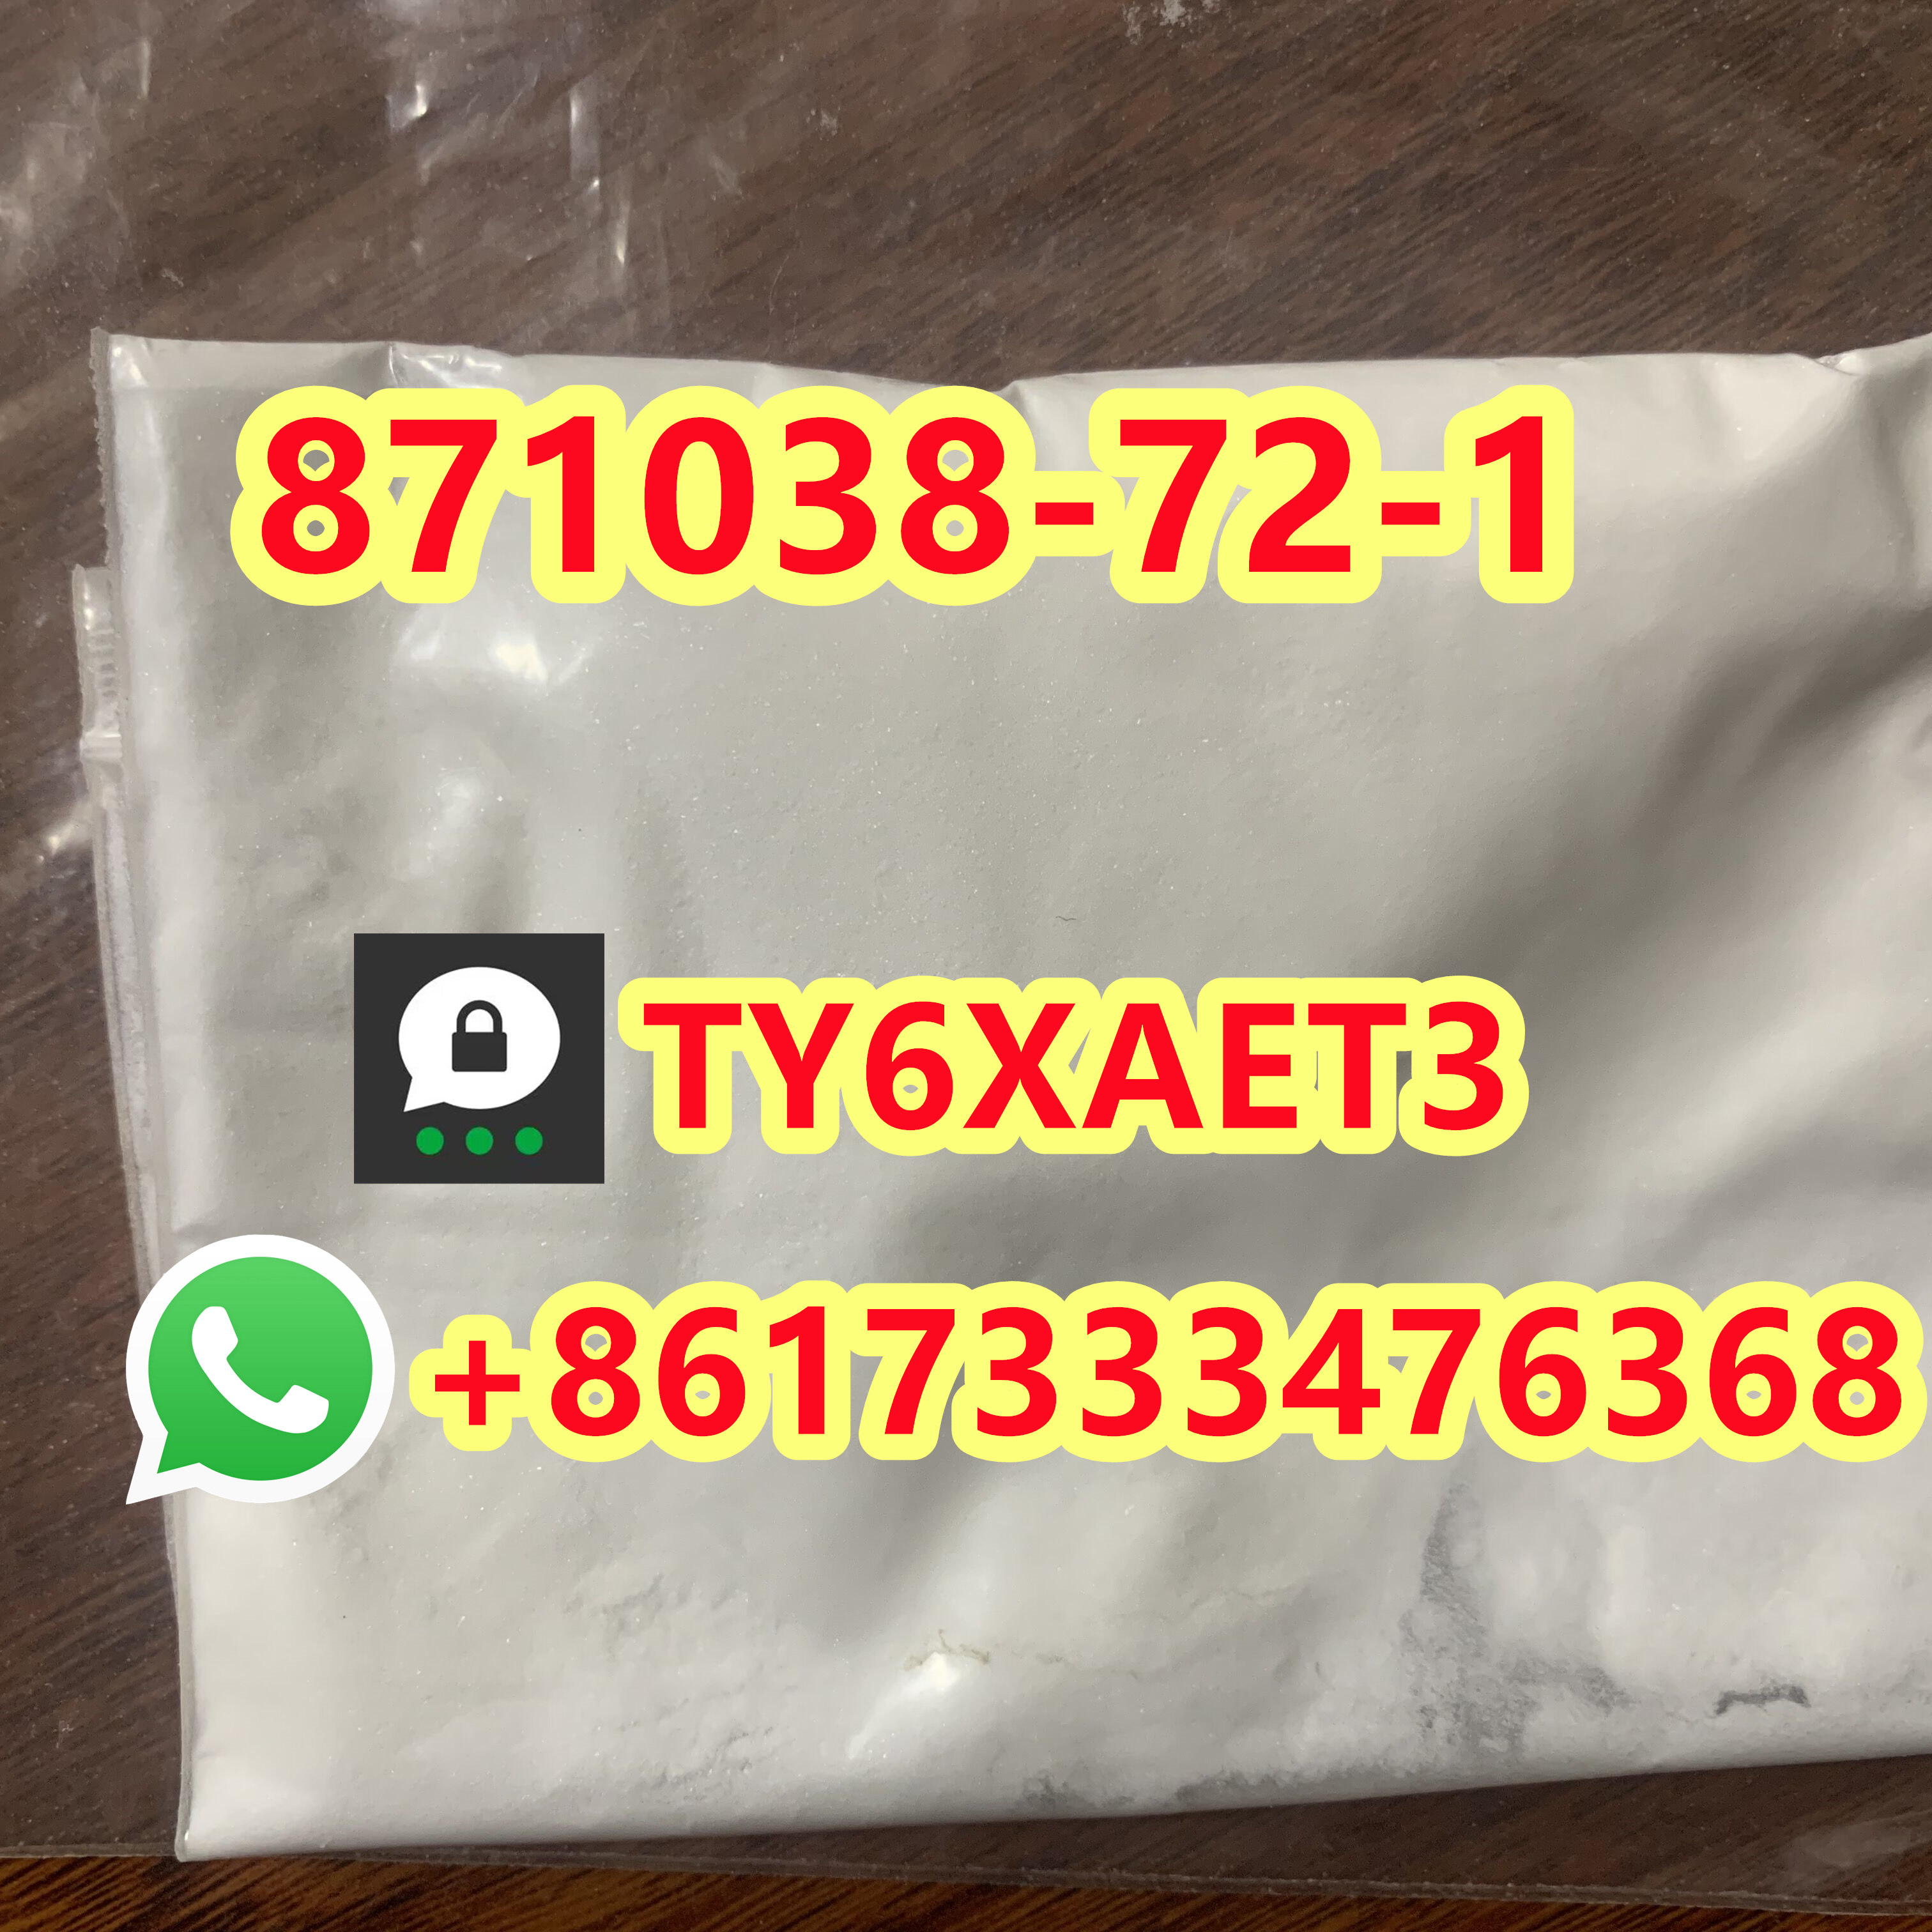 Top qulaity manufacture supply CAS 871038-72-1 Raltegravir potassium in stock,WhatsApp/Tel: +86 17333476368